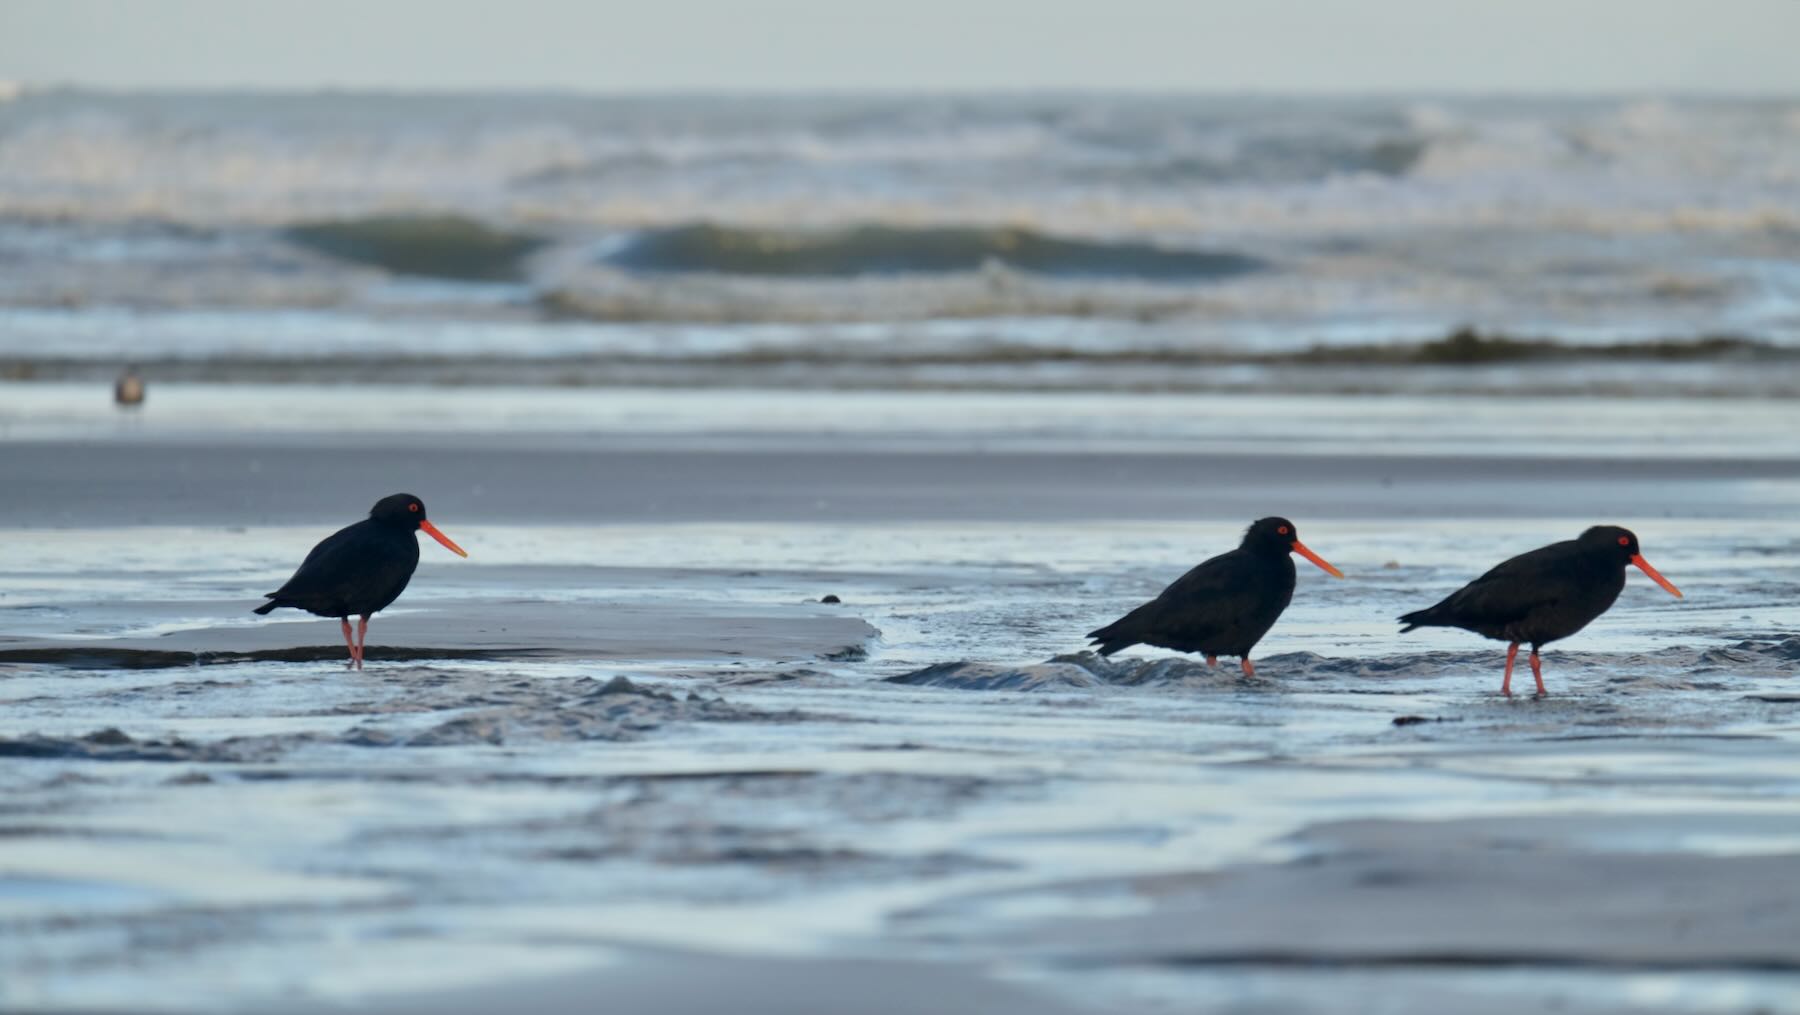 Medium size black birds with long orange beaks in shallow water. 